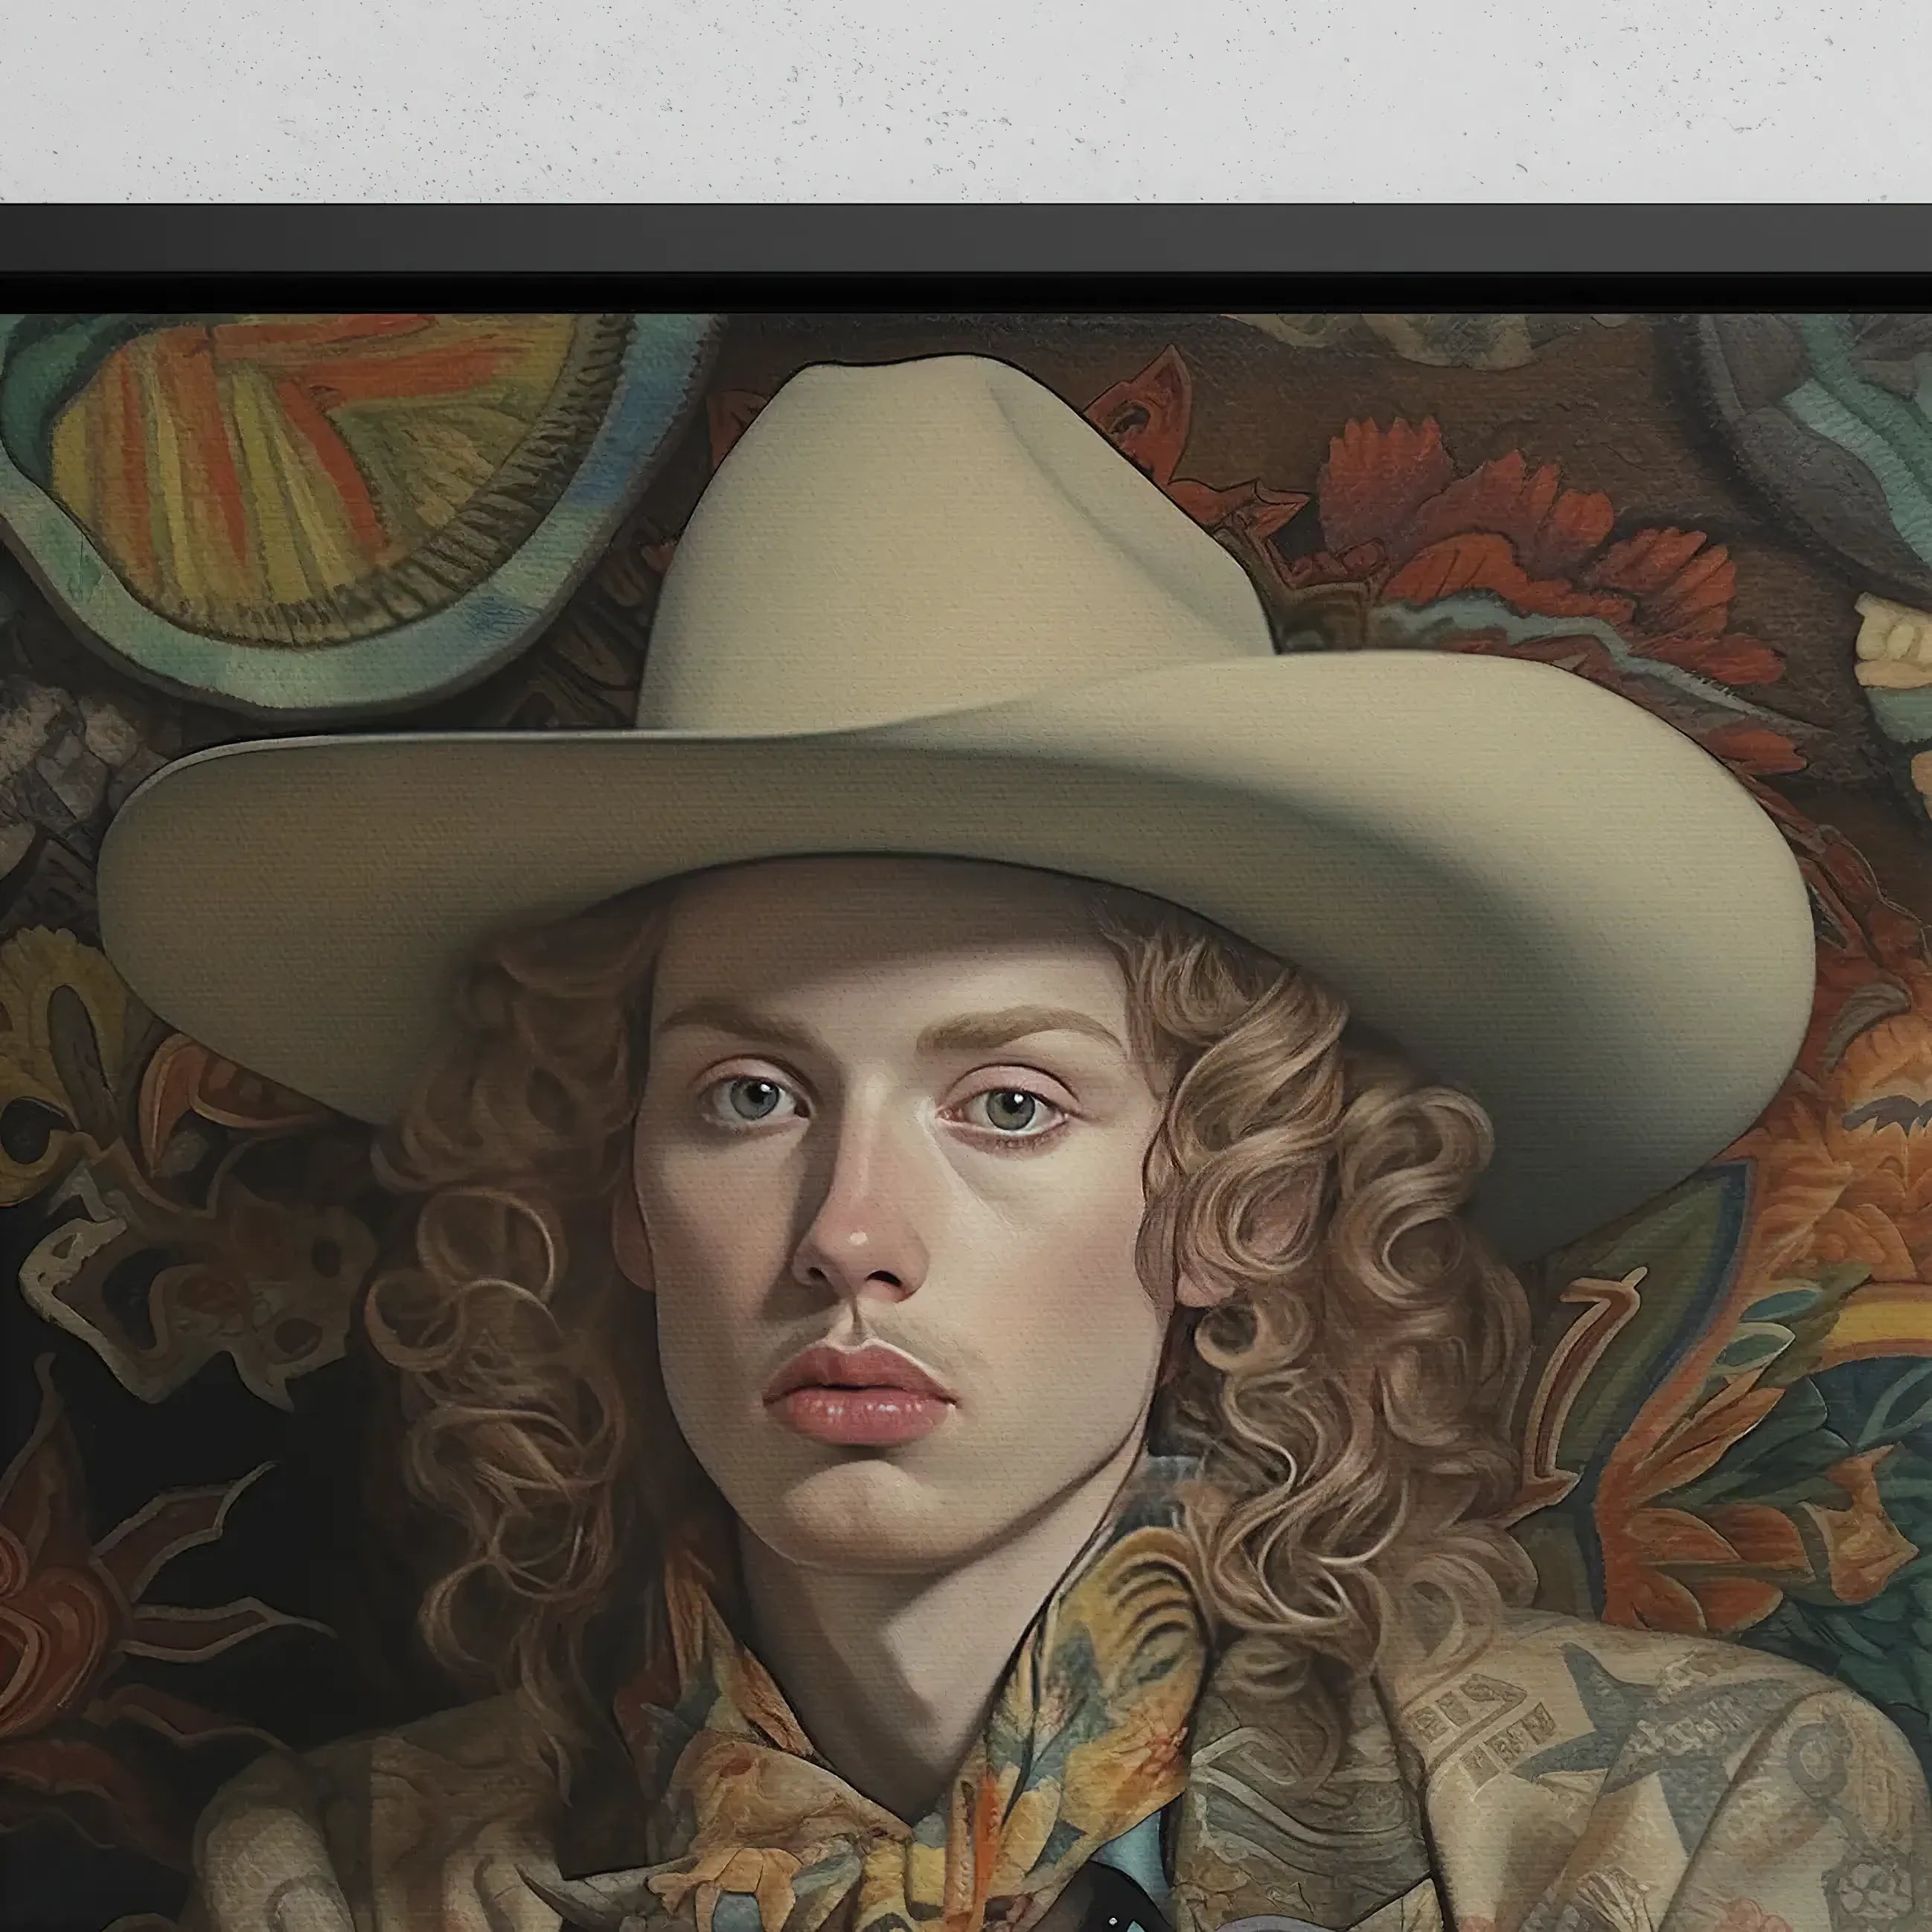 Ollie The Transgender Cowboy - F2m Dandy Transman Canvas Art - Posters Prints & Visual Artwork - Aesthetic Art